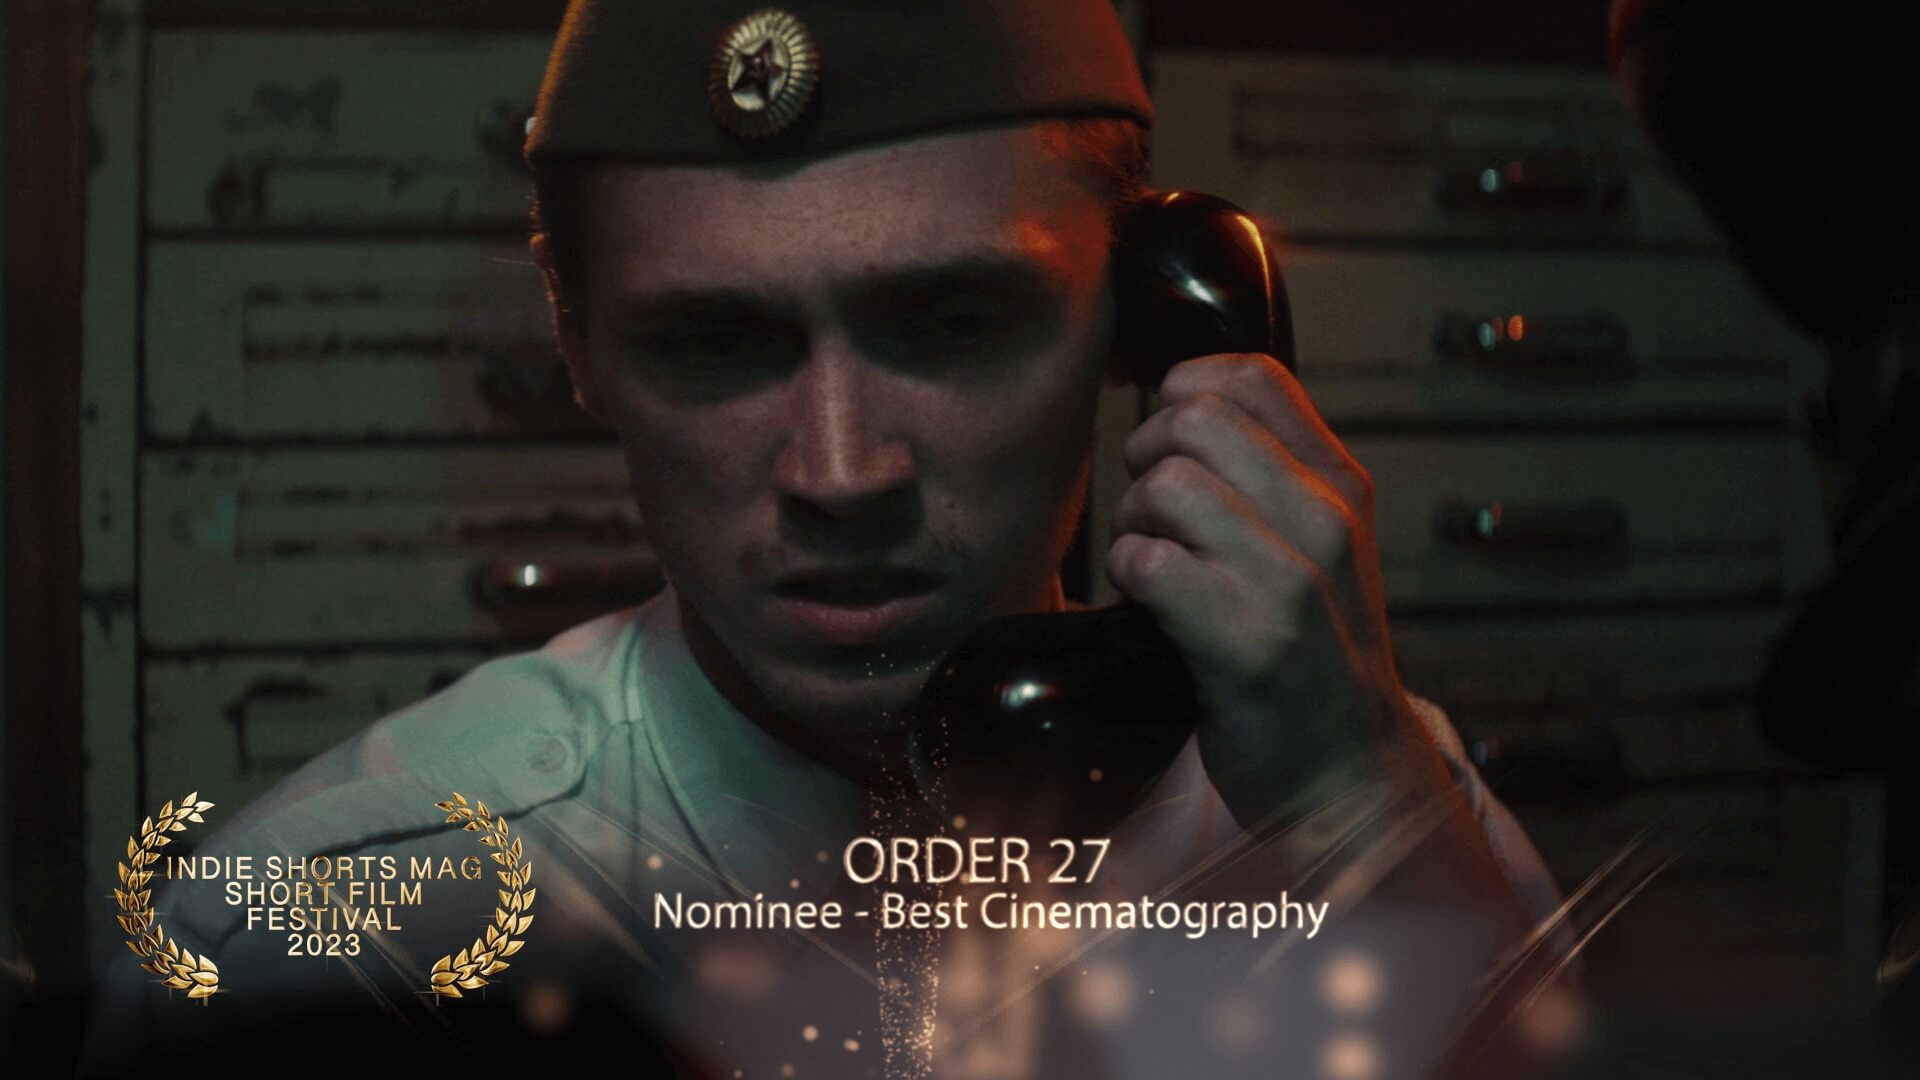 Indie Shorts Mag Short Film Festival - Best Cinematography - Nominee - Order 27